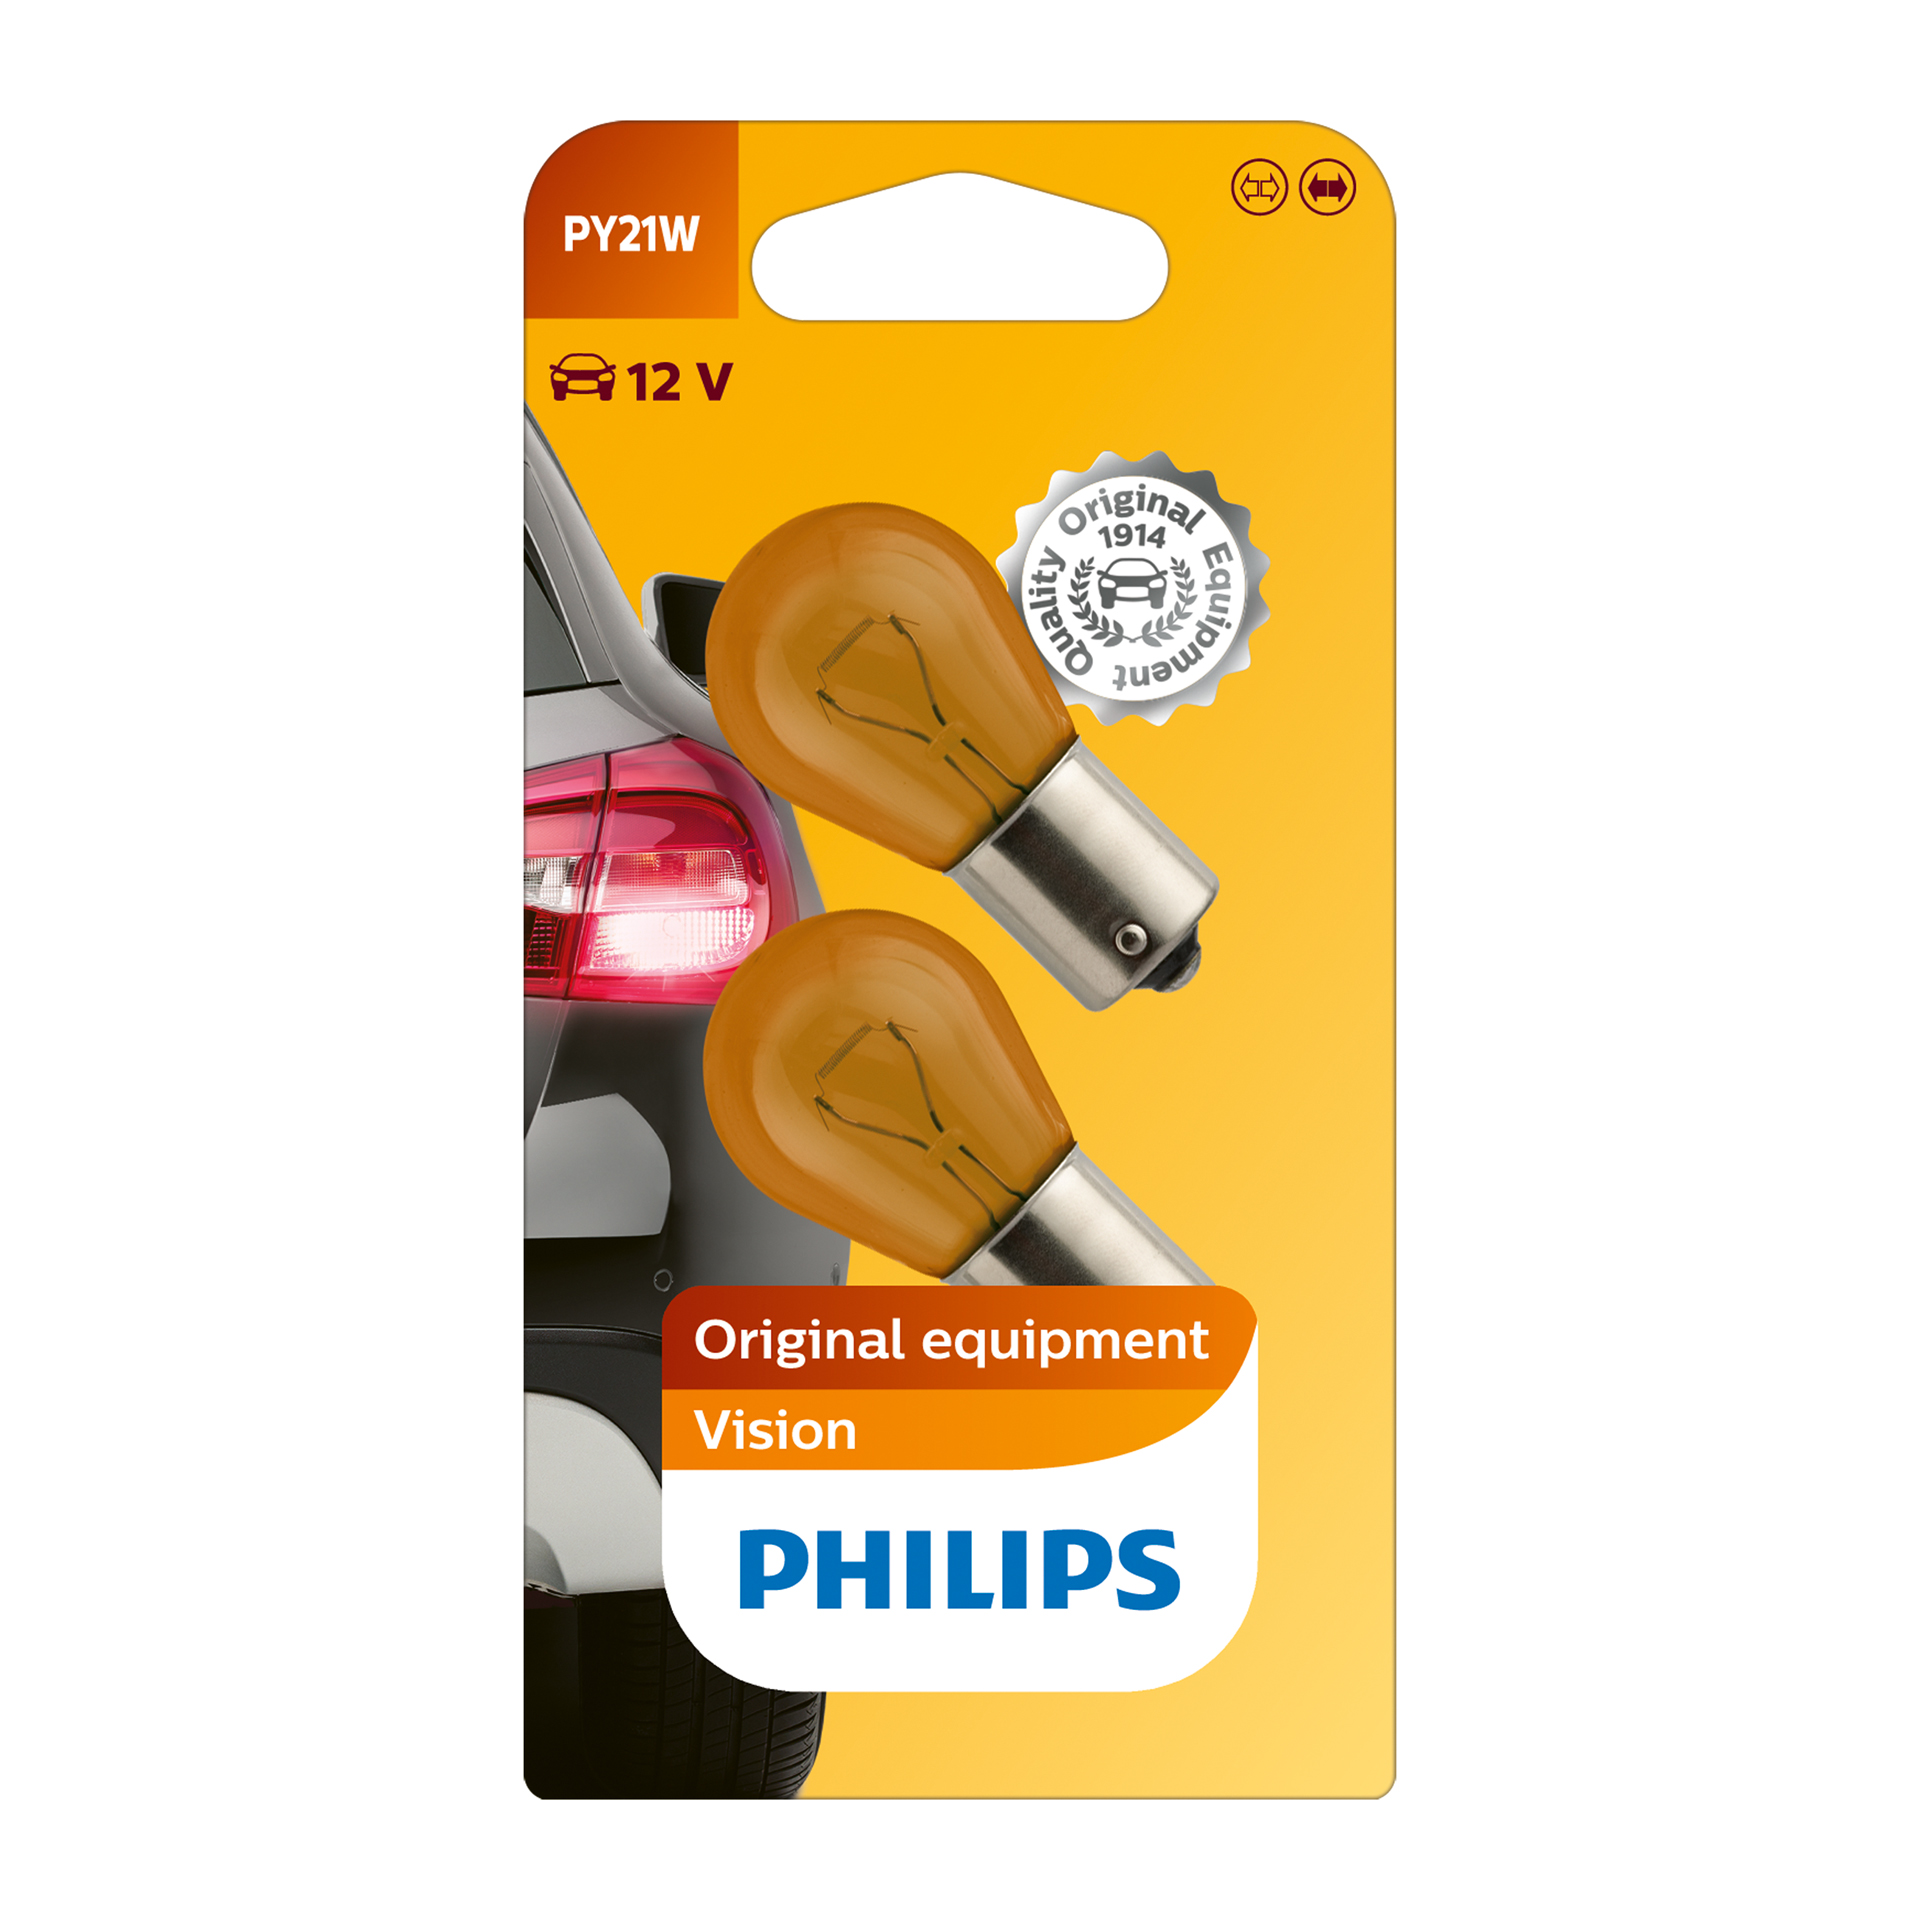 Philips Philips 12496NAB2 PY21W Vision 0730063